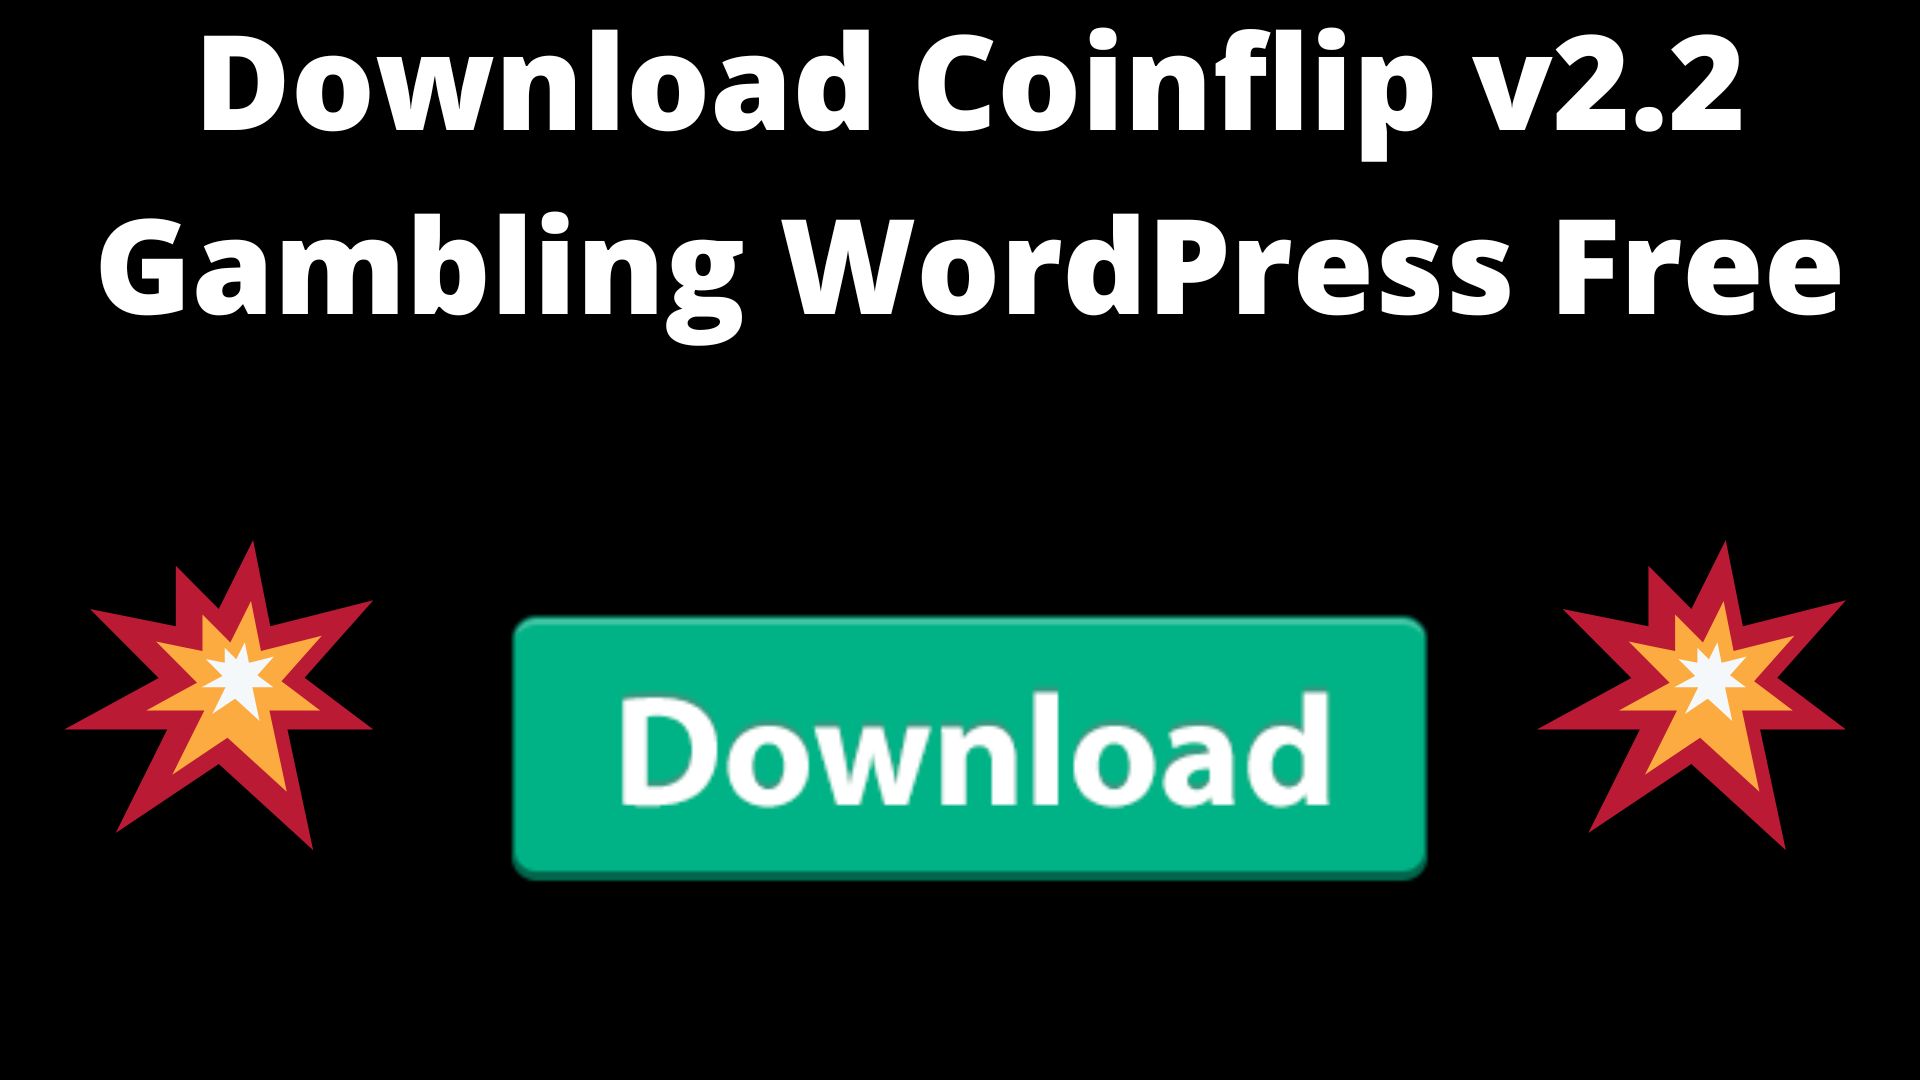 Download Coinflip V2.2 Gambling Wordpress Free